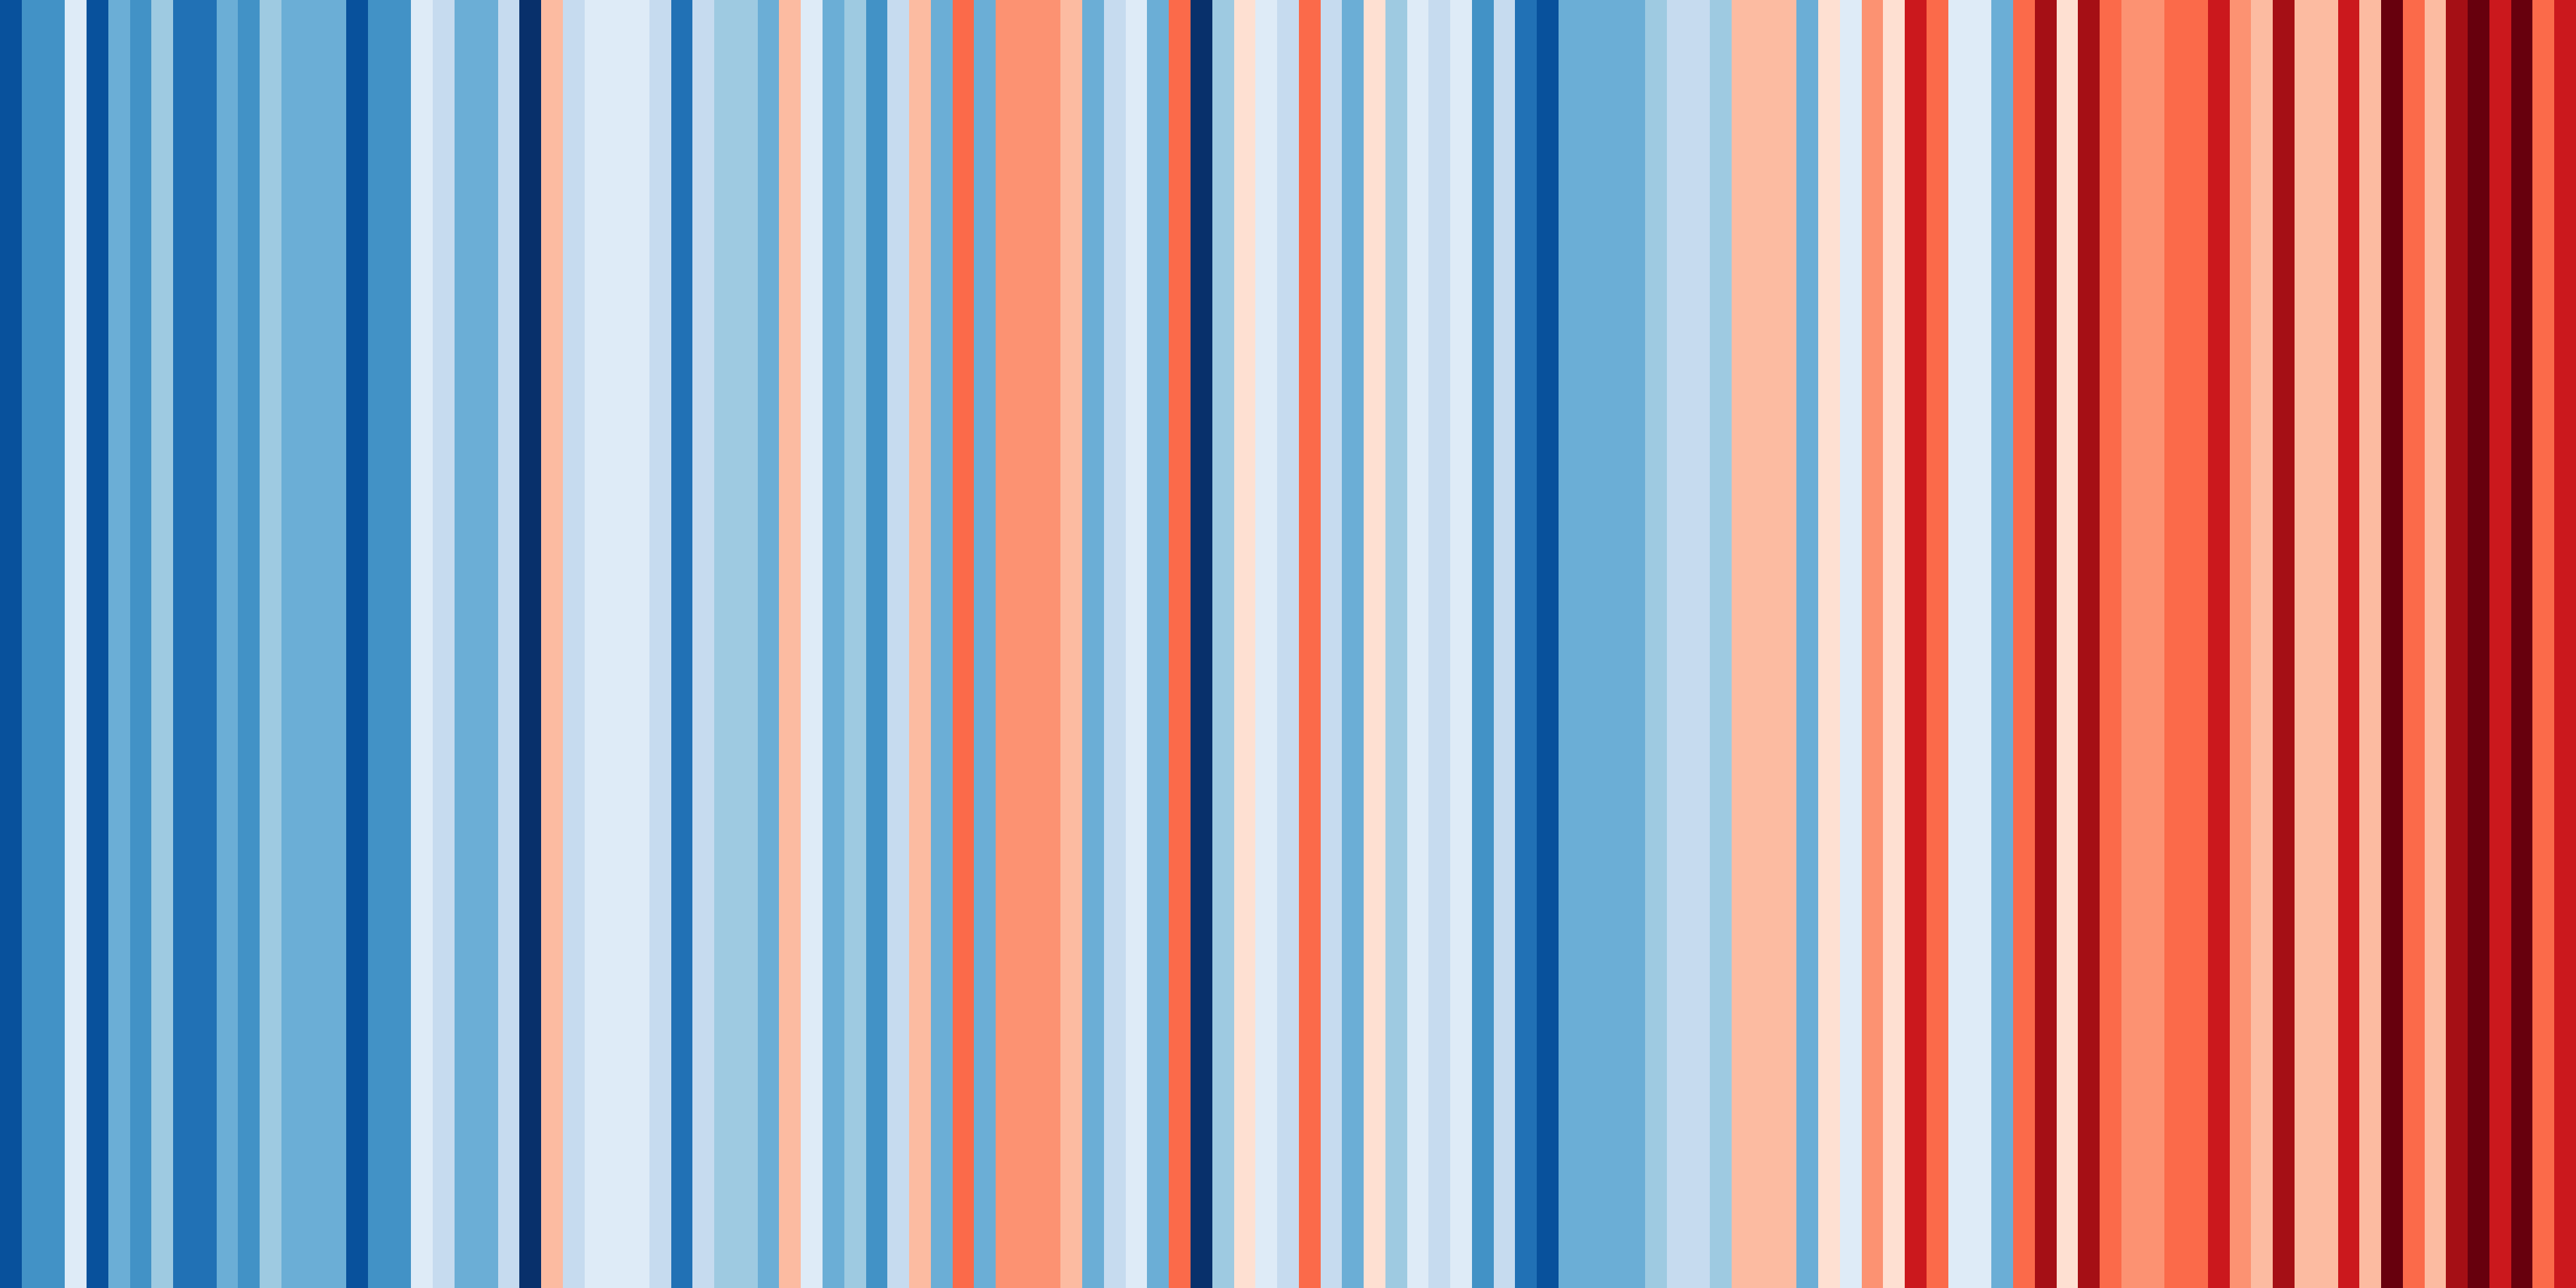 “Warming stripe” para España desde 1901 hasta 2019